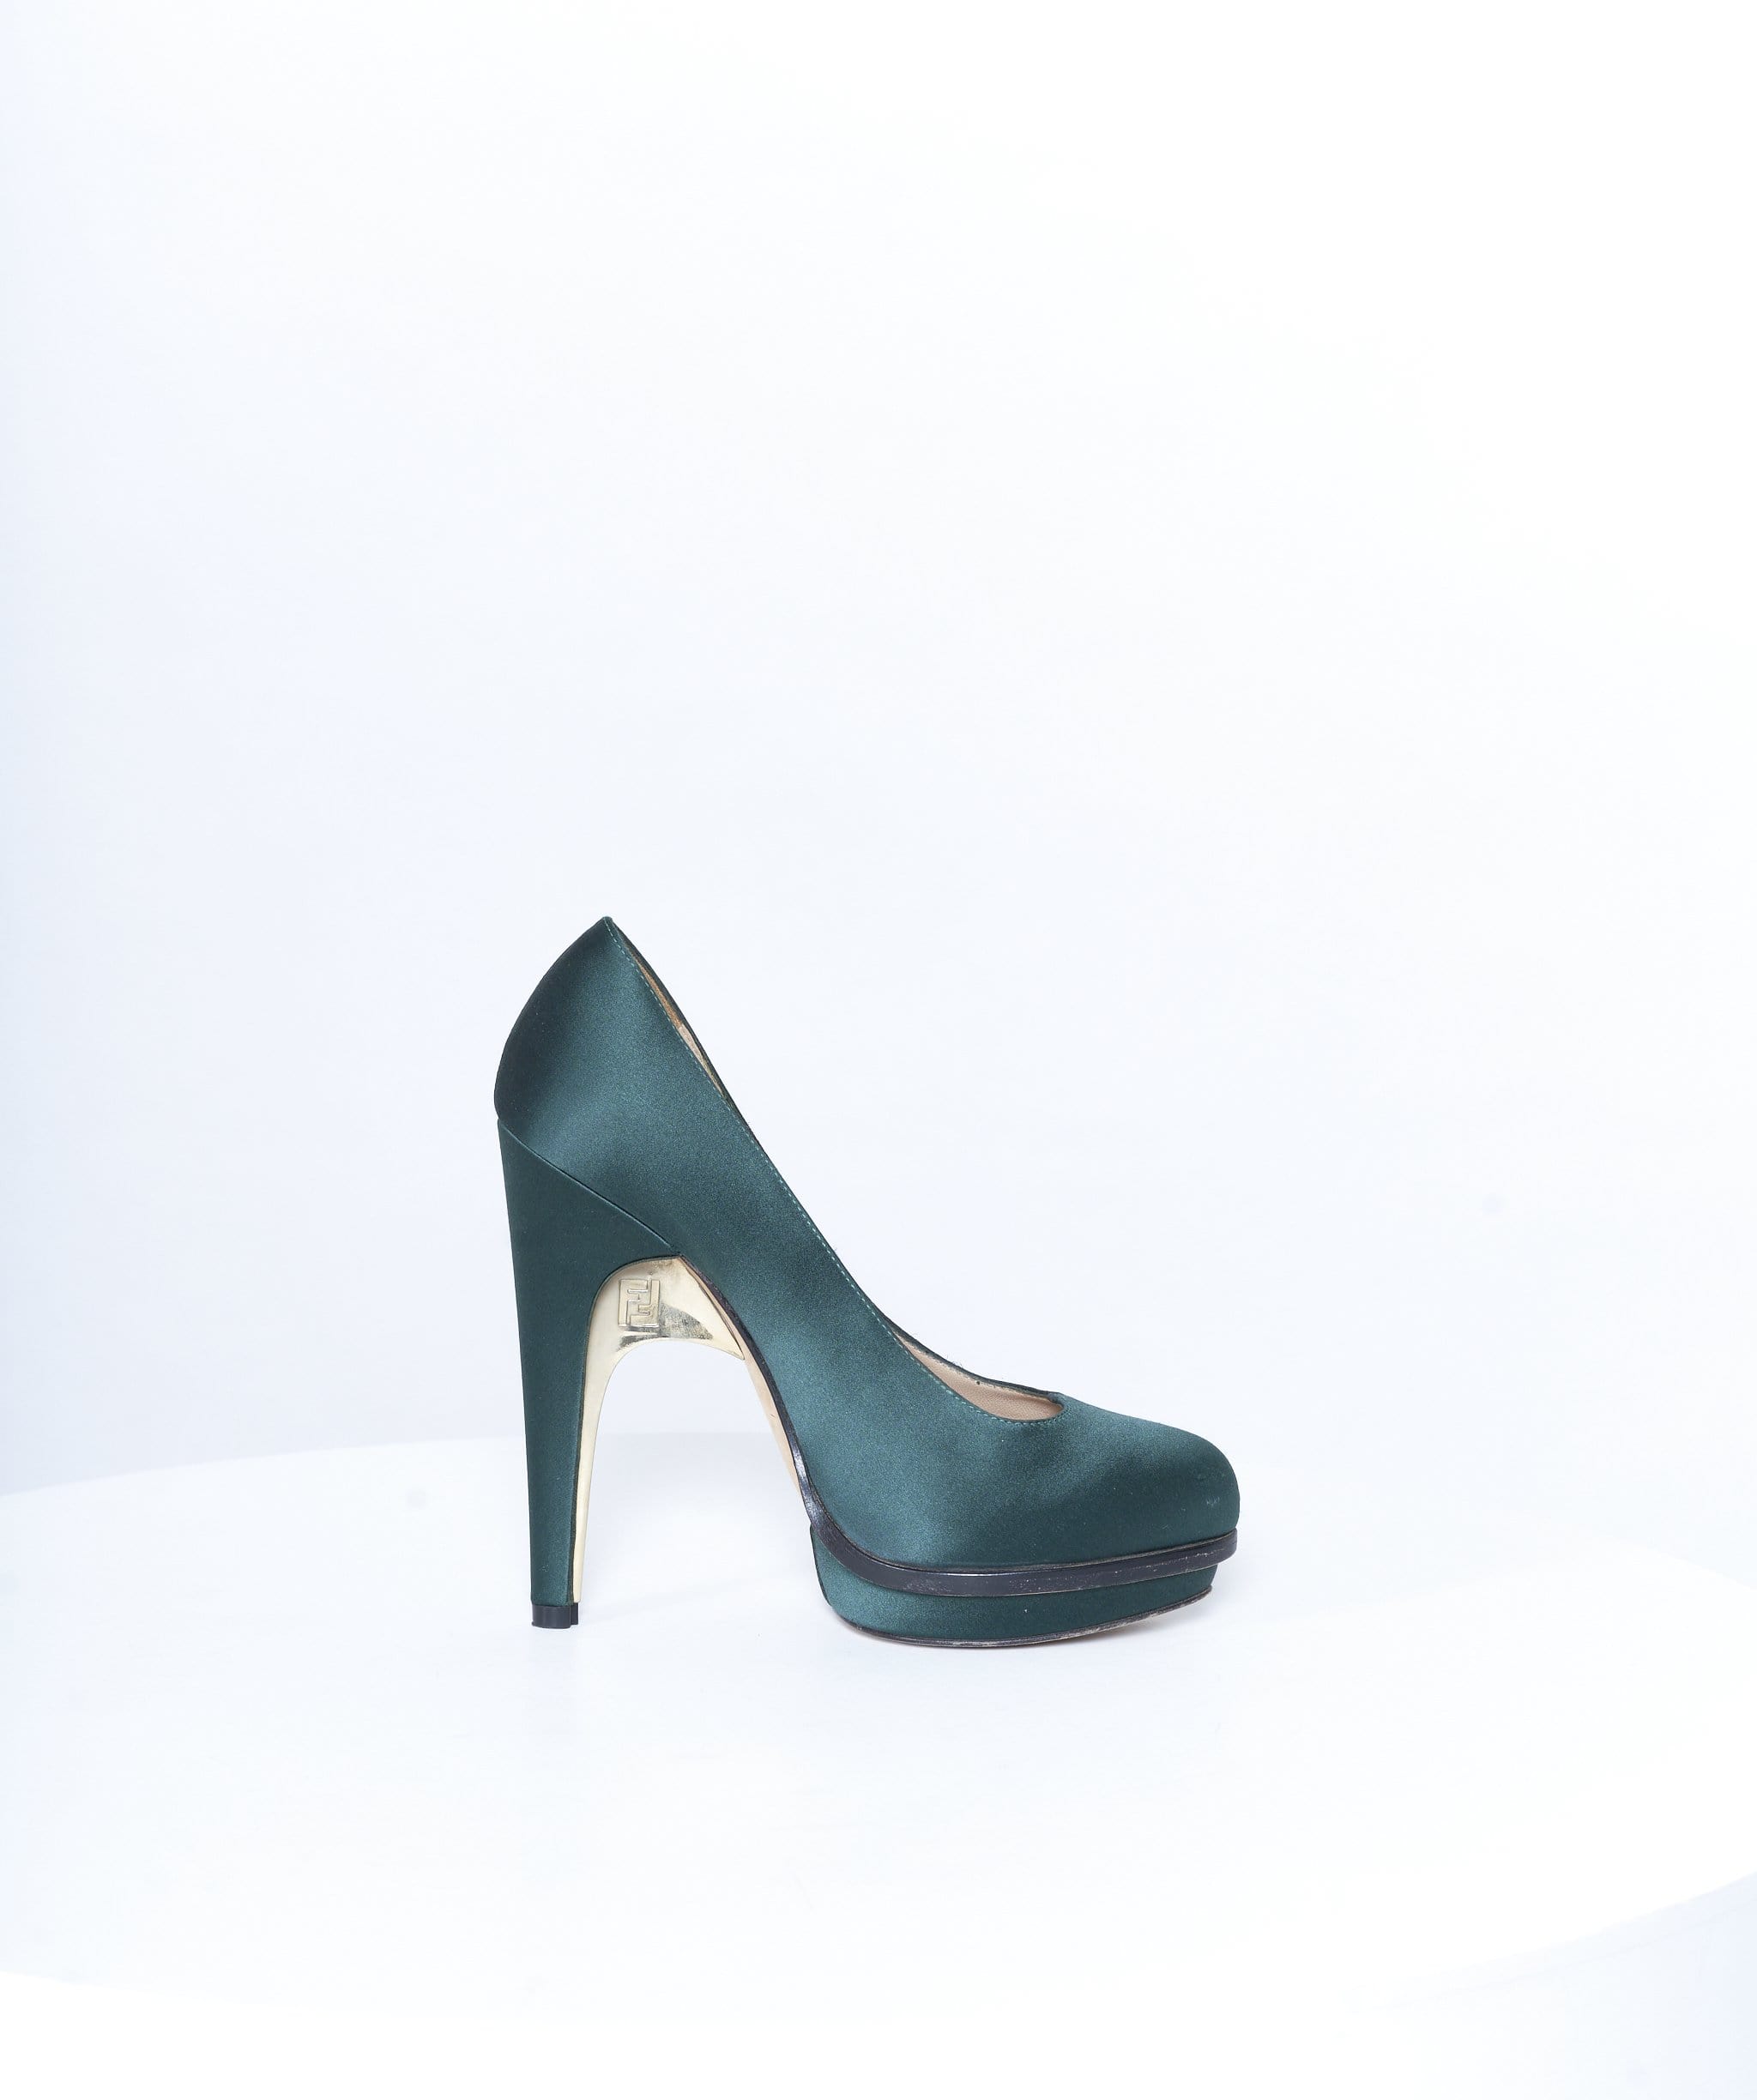 Fendi Fendi Green satin heels size 37.5